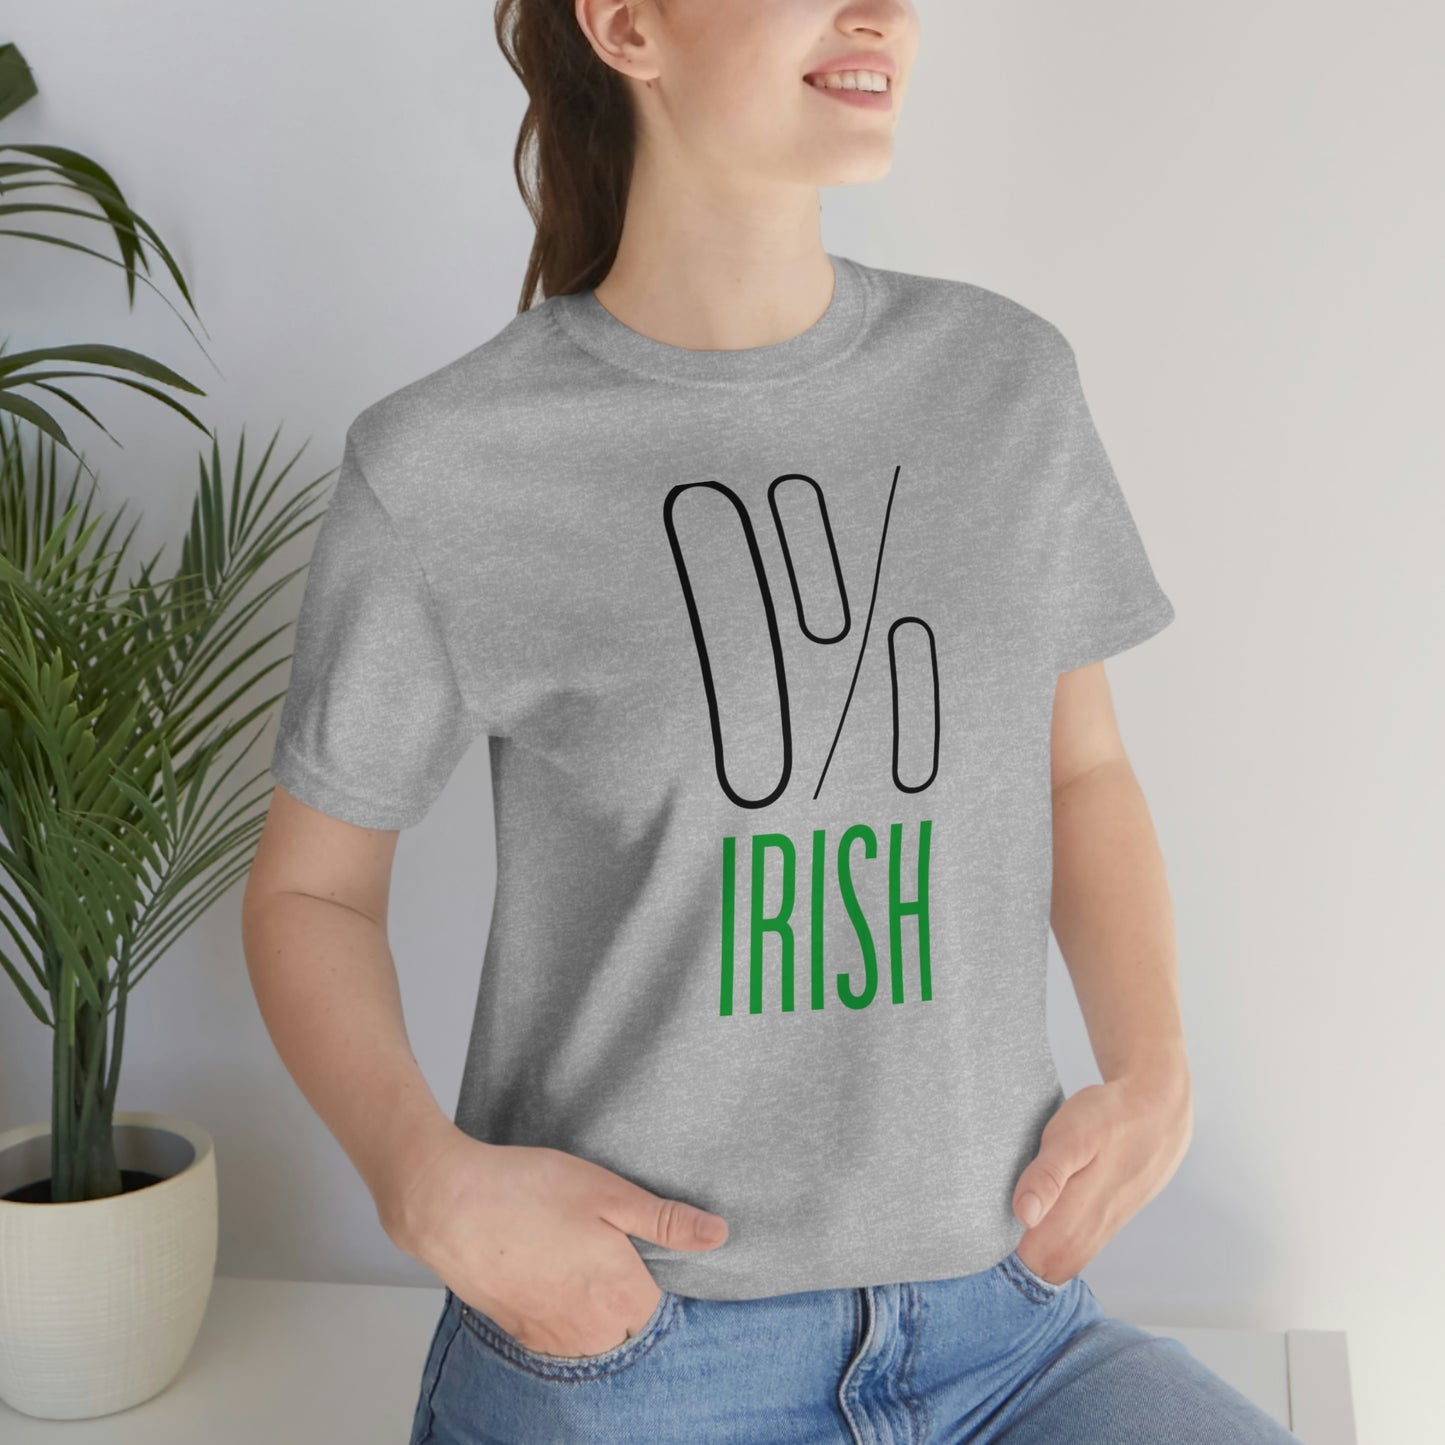 Zero Percent Irish T-Shirt | EDGY T-Shirt Company | Funny Unisex Jersey Short Sleeve Tee